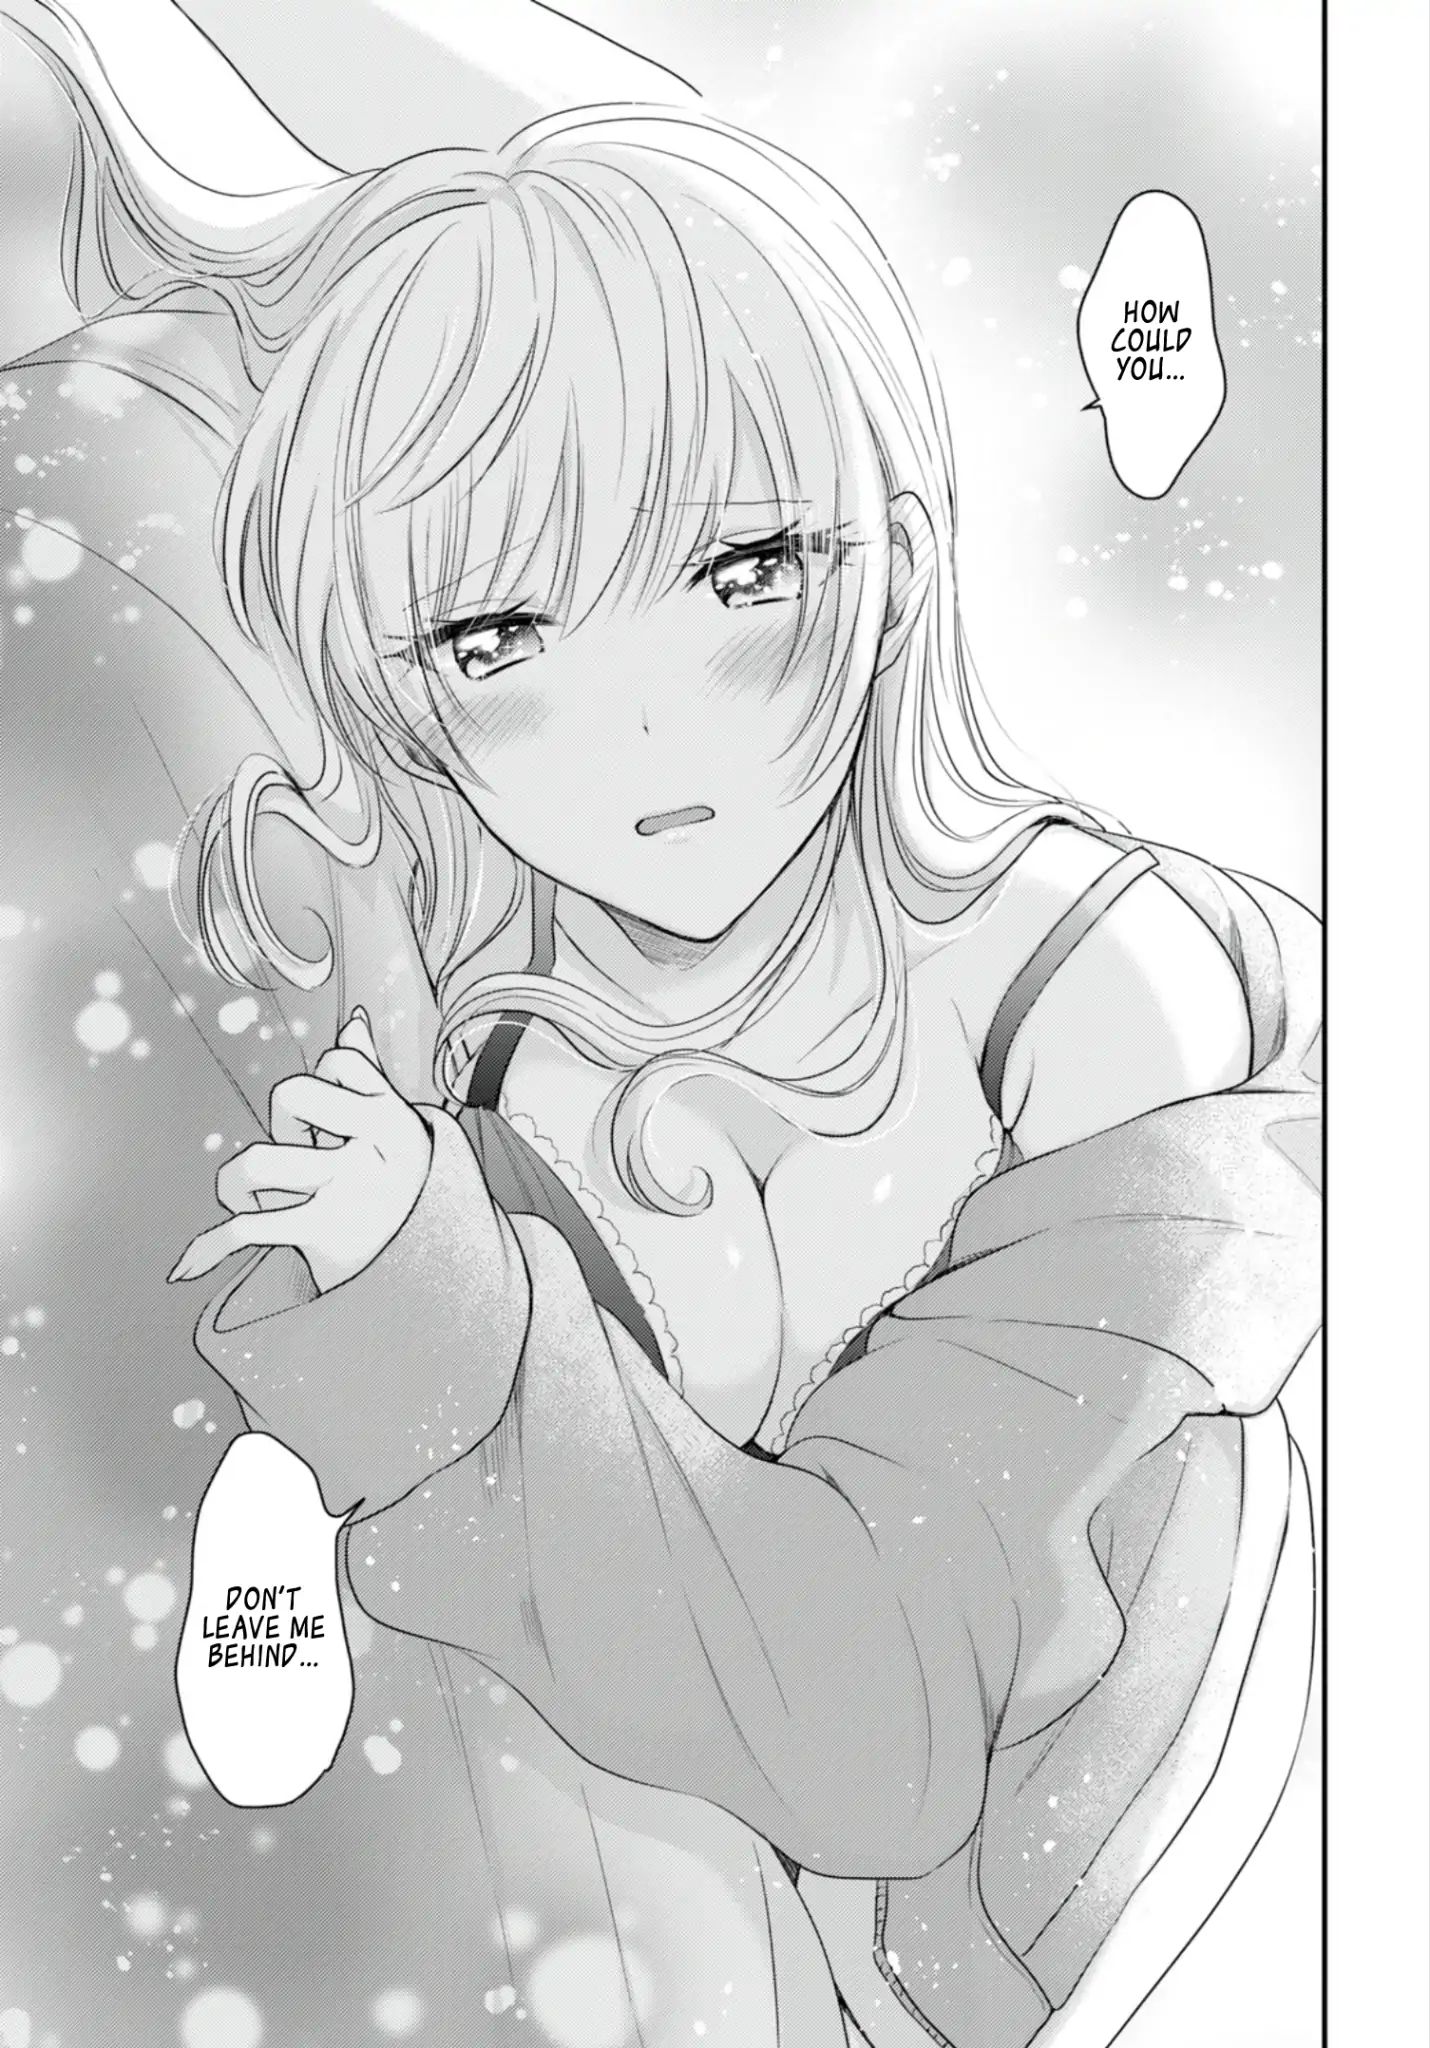 This Manga Has Beautiful Art